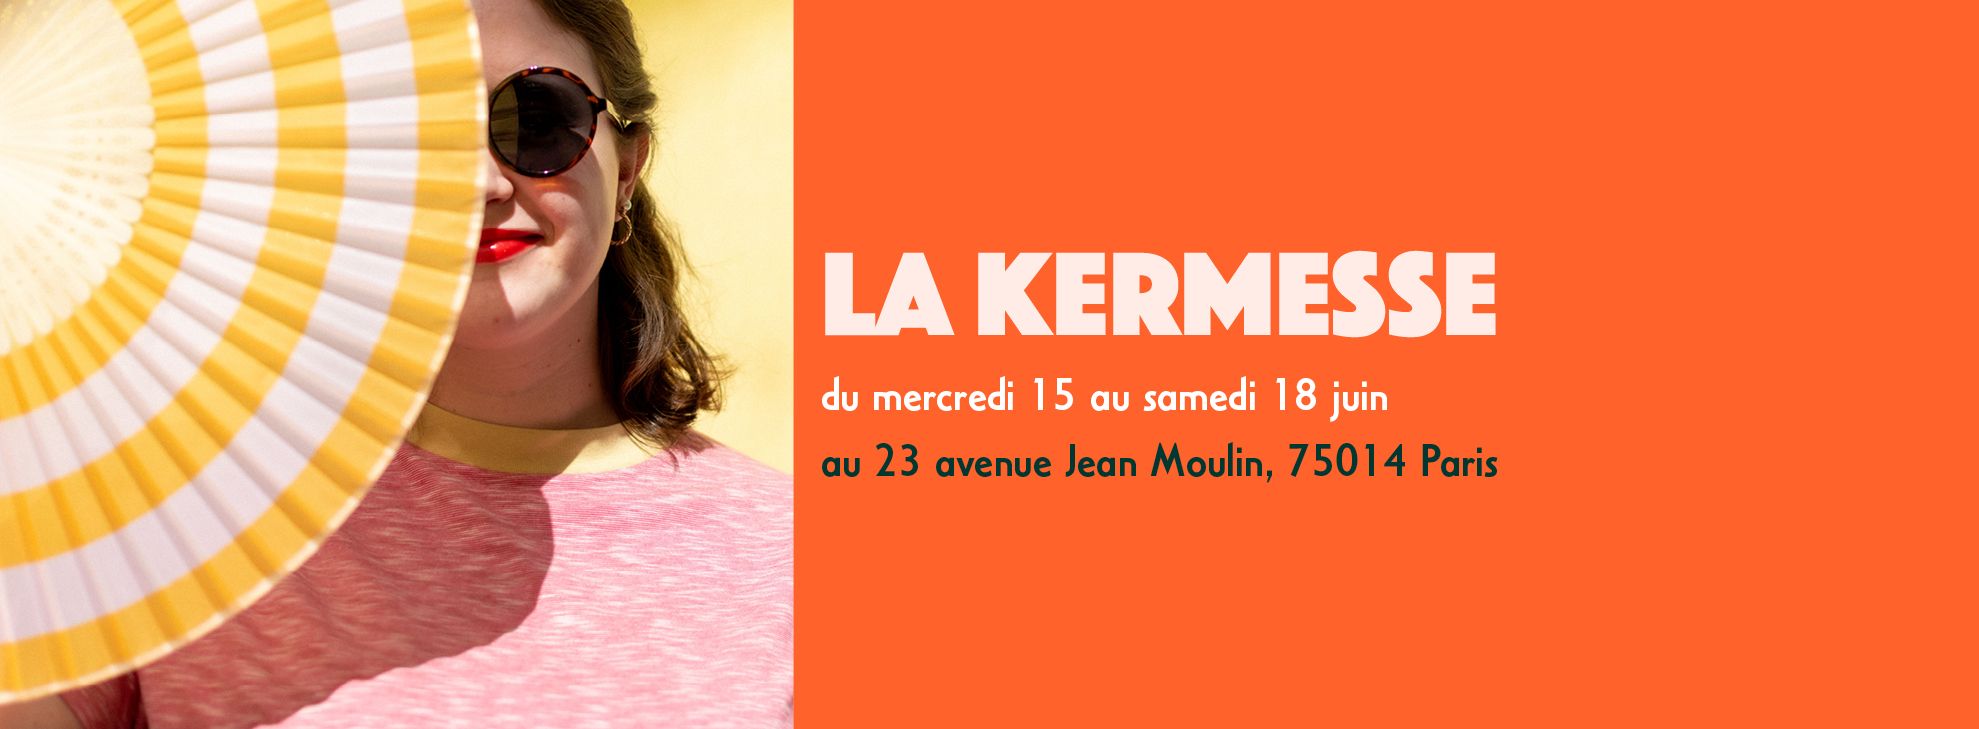 La kermesse Artesane, du 15 au 18 juin au 23 avenue Jean Moulin, Paris 14